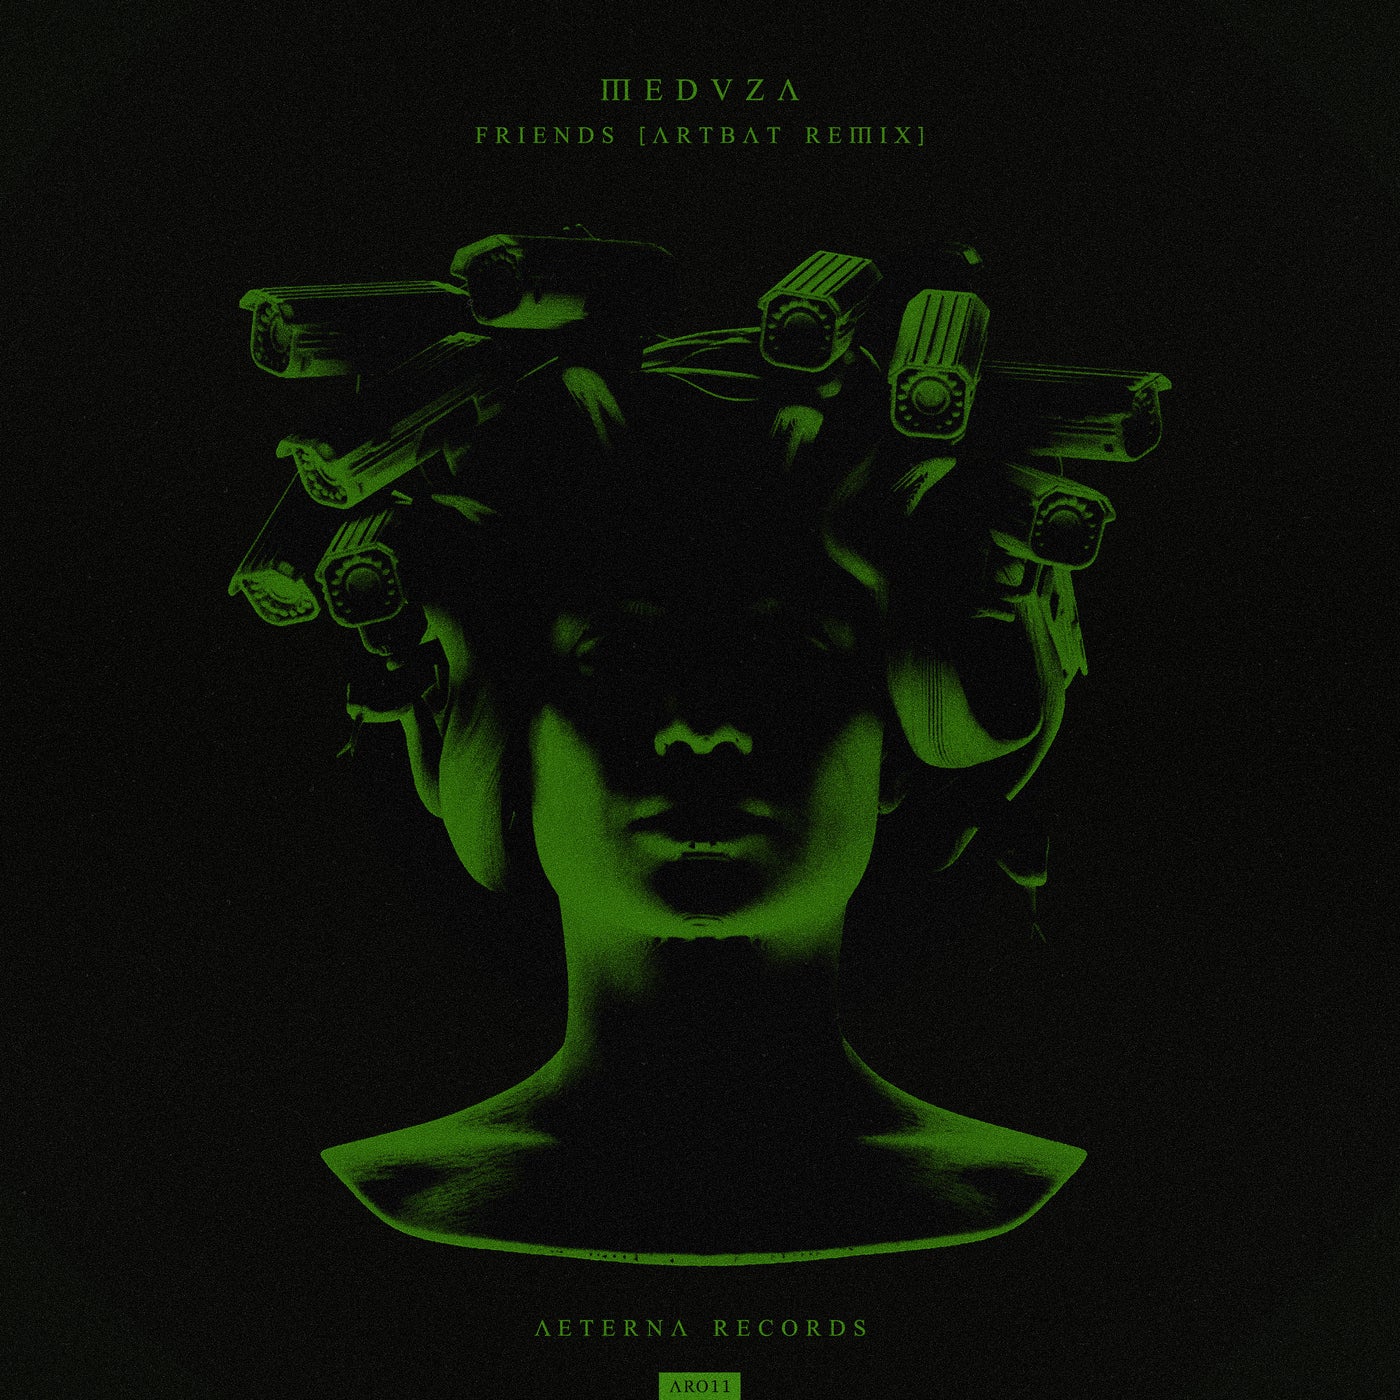 image cover: Meduza - Friends (ARTBAT Remix Extended) on AETERNA Records